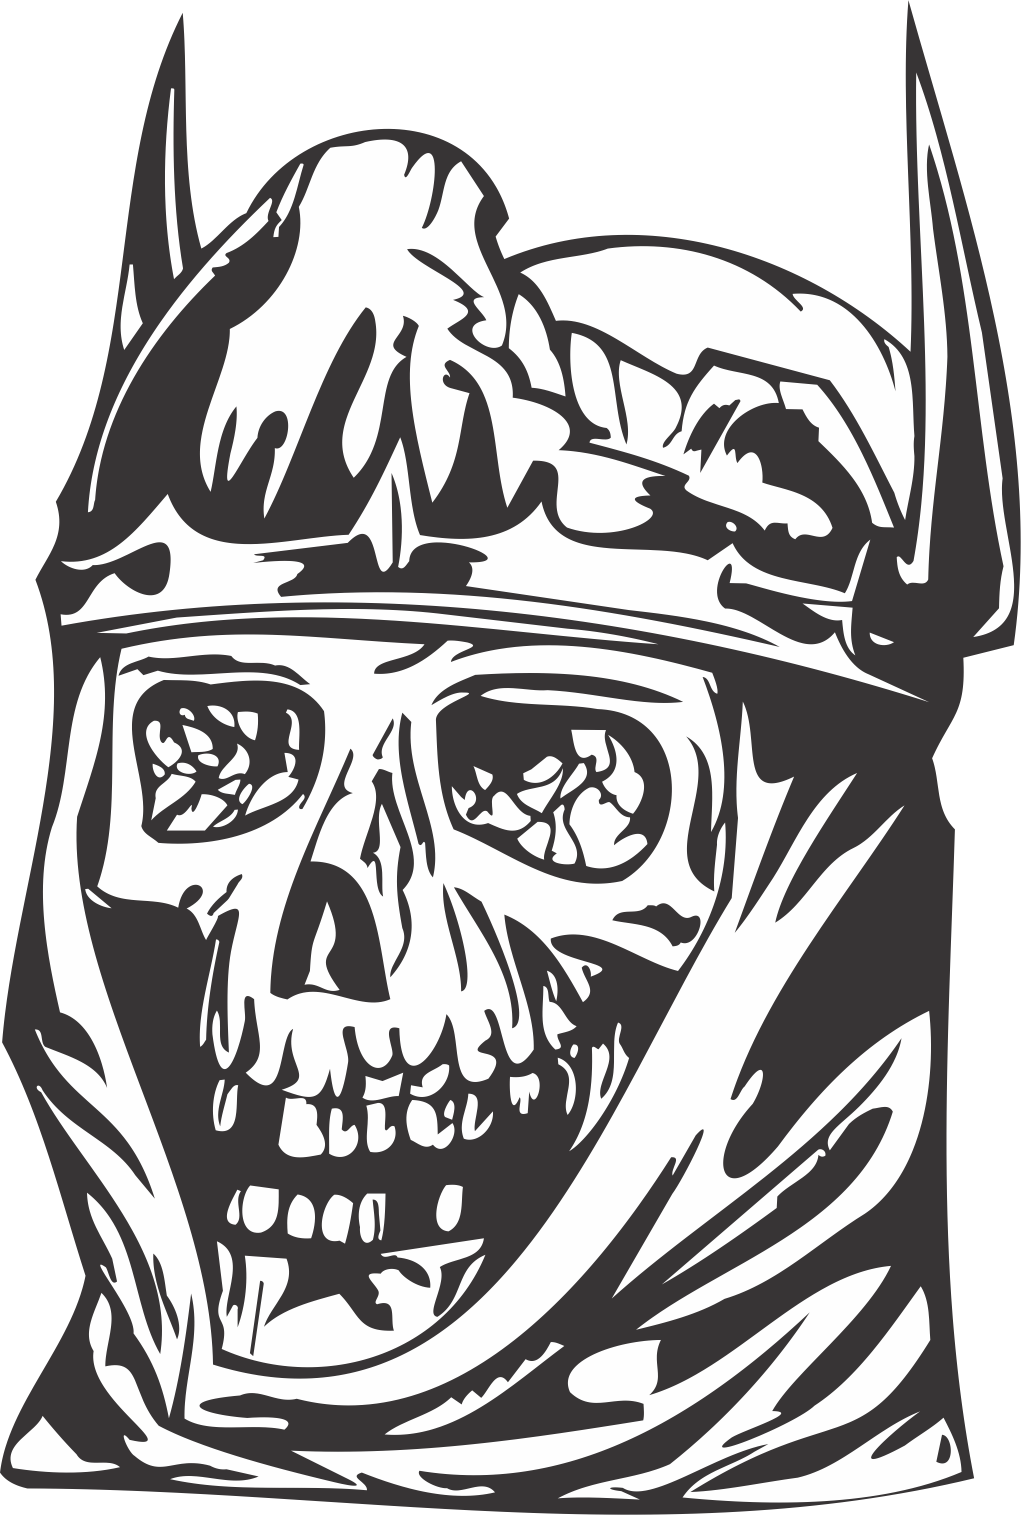 King Skull Free DXF File